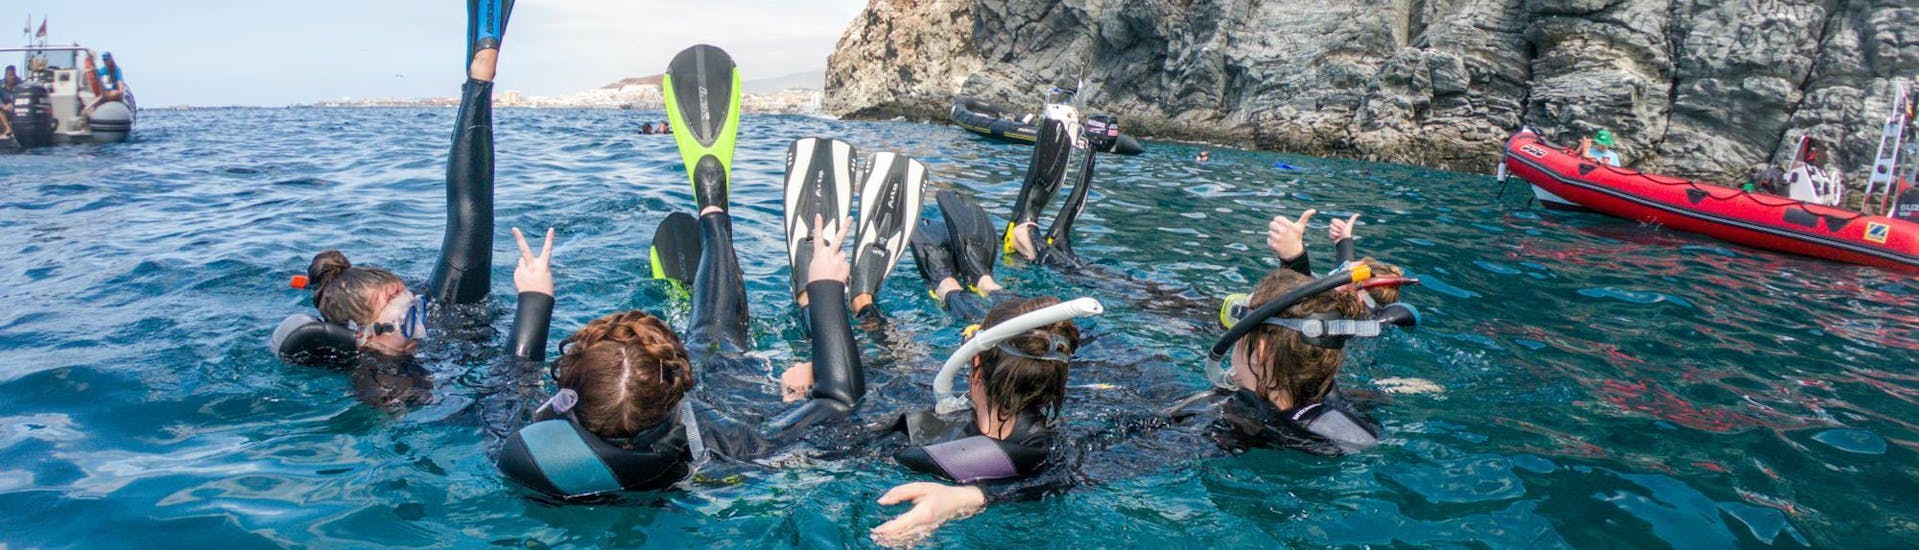 snorkeling-excursion-in-tenerife-aqua-marina-dive-tenerife-hero